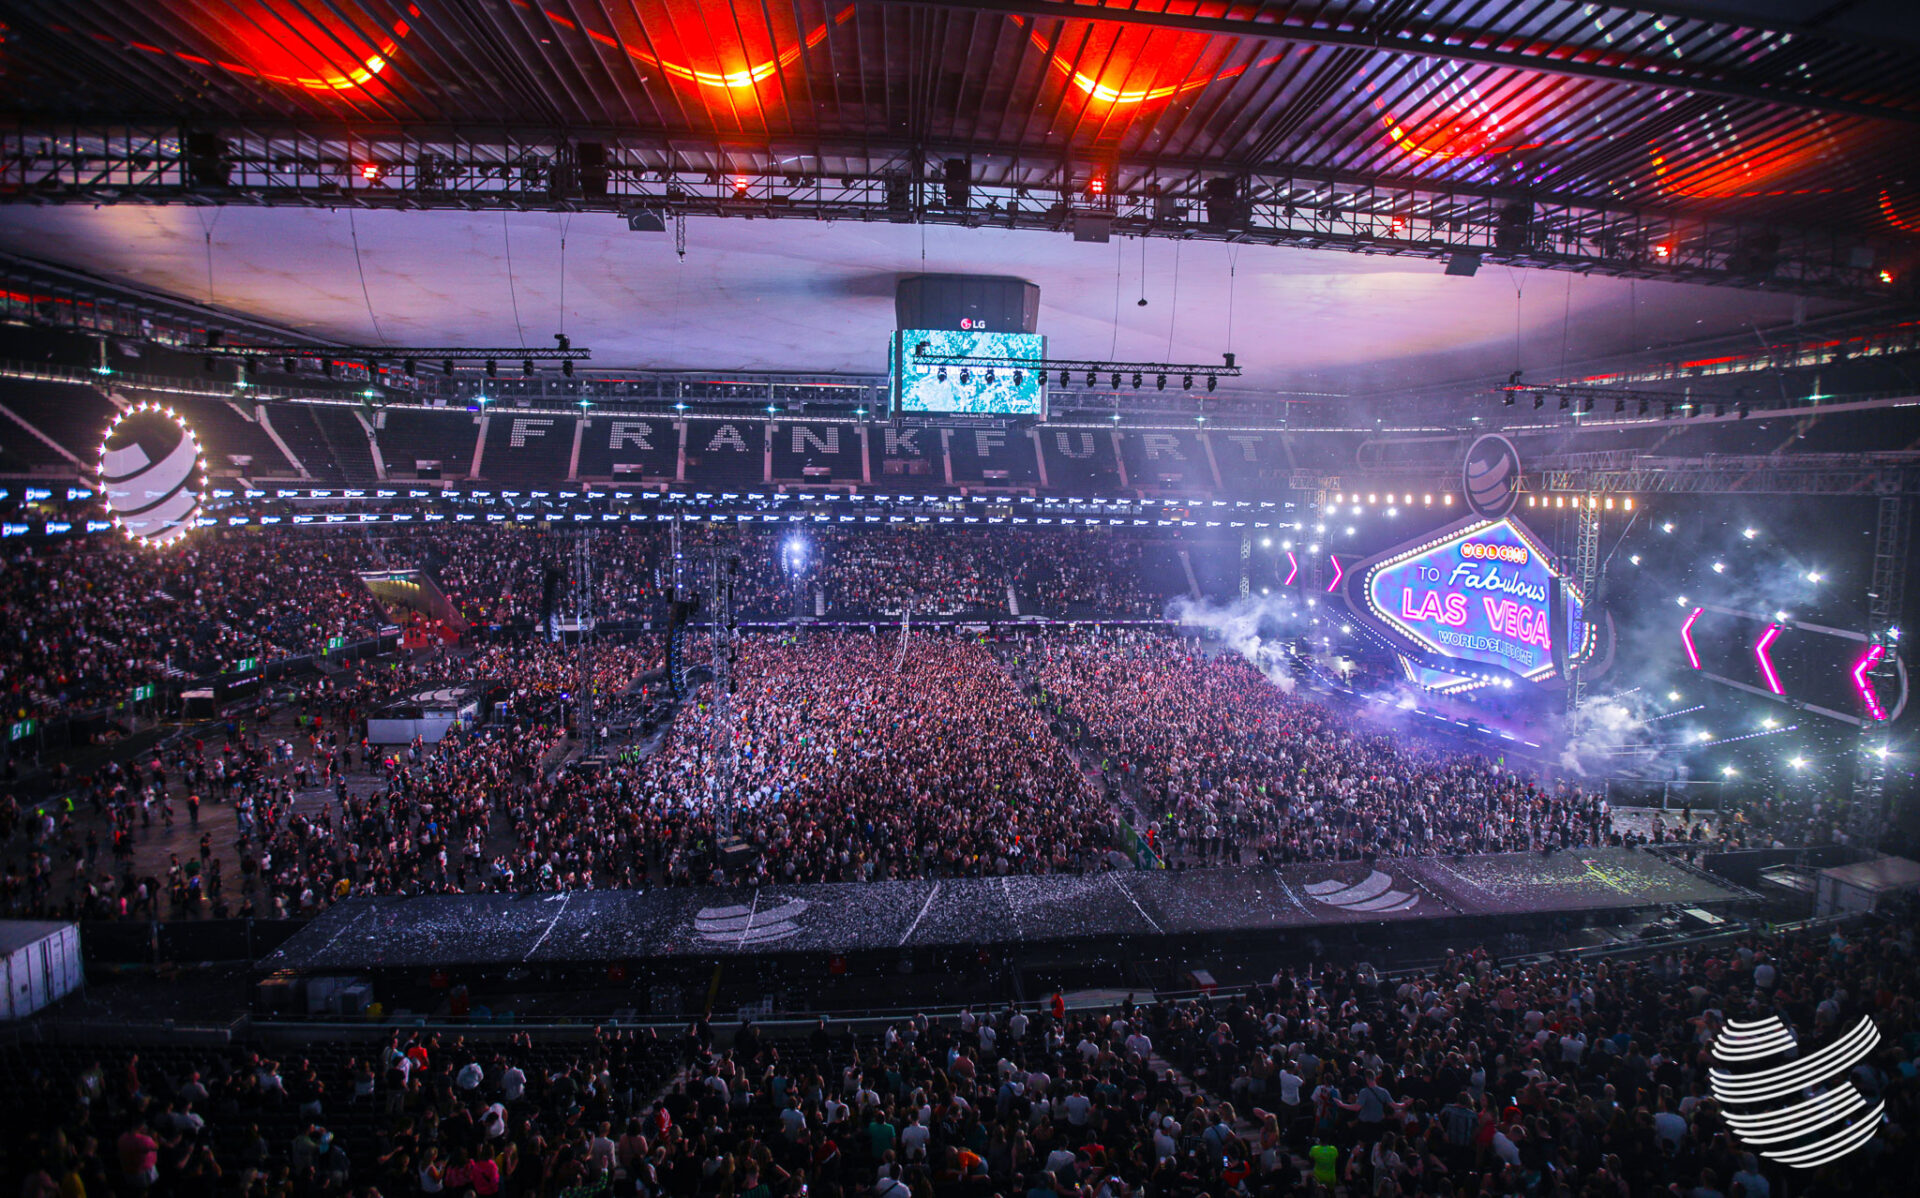 WORLD CLUB DOME: Where Massive Headliners and Emerging Talents Unite